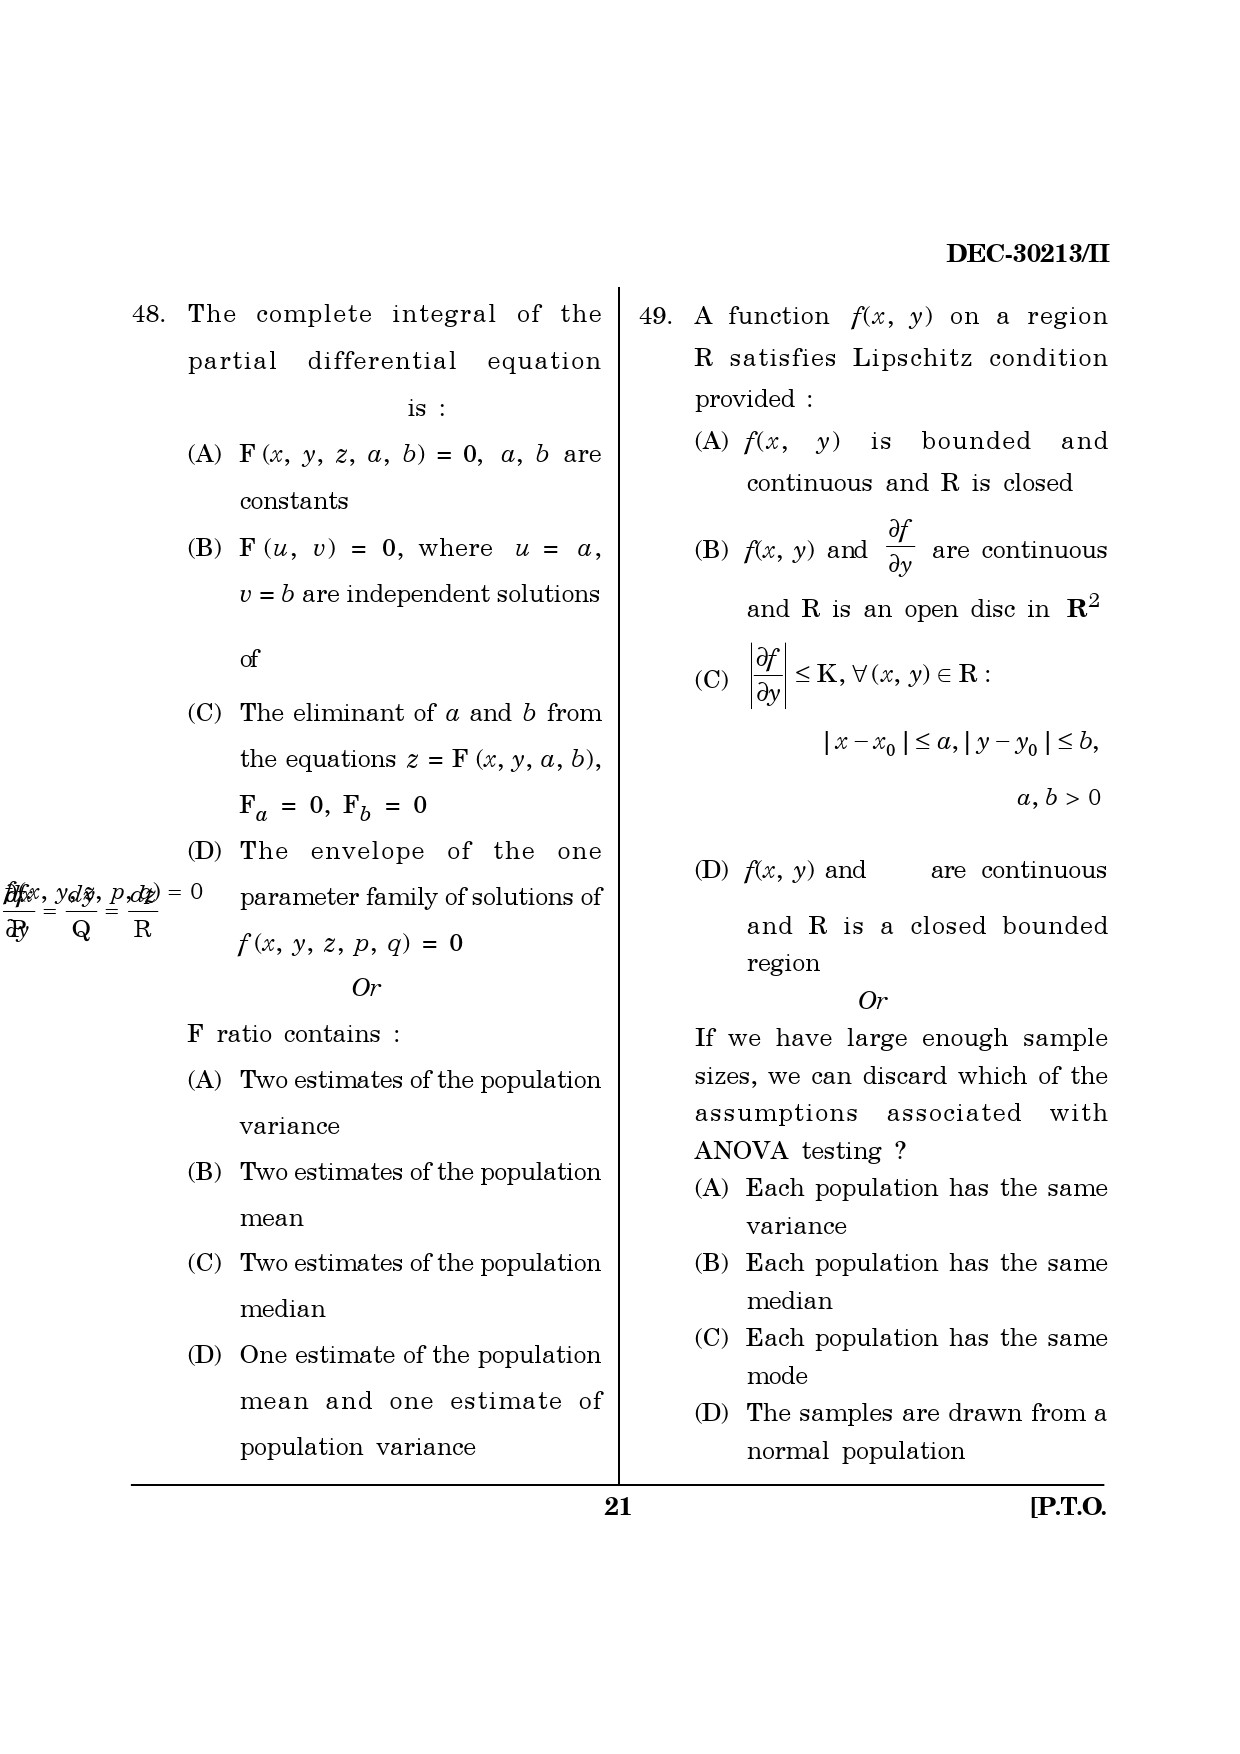 Maharashtra SET Mathematical Sciences Question Paper II December 2013 20